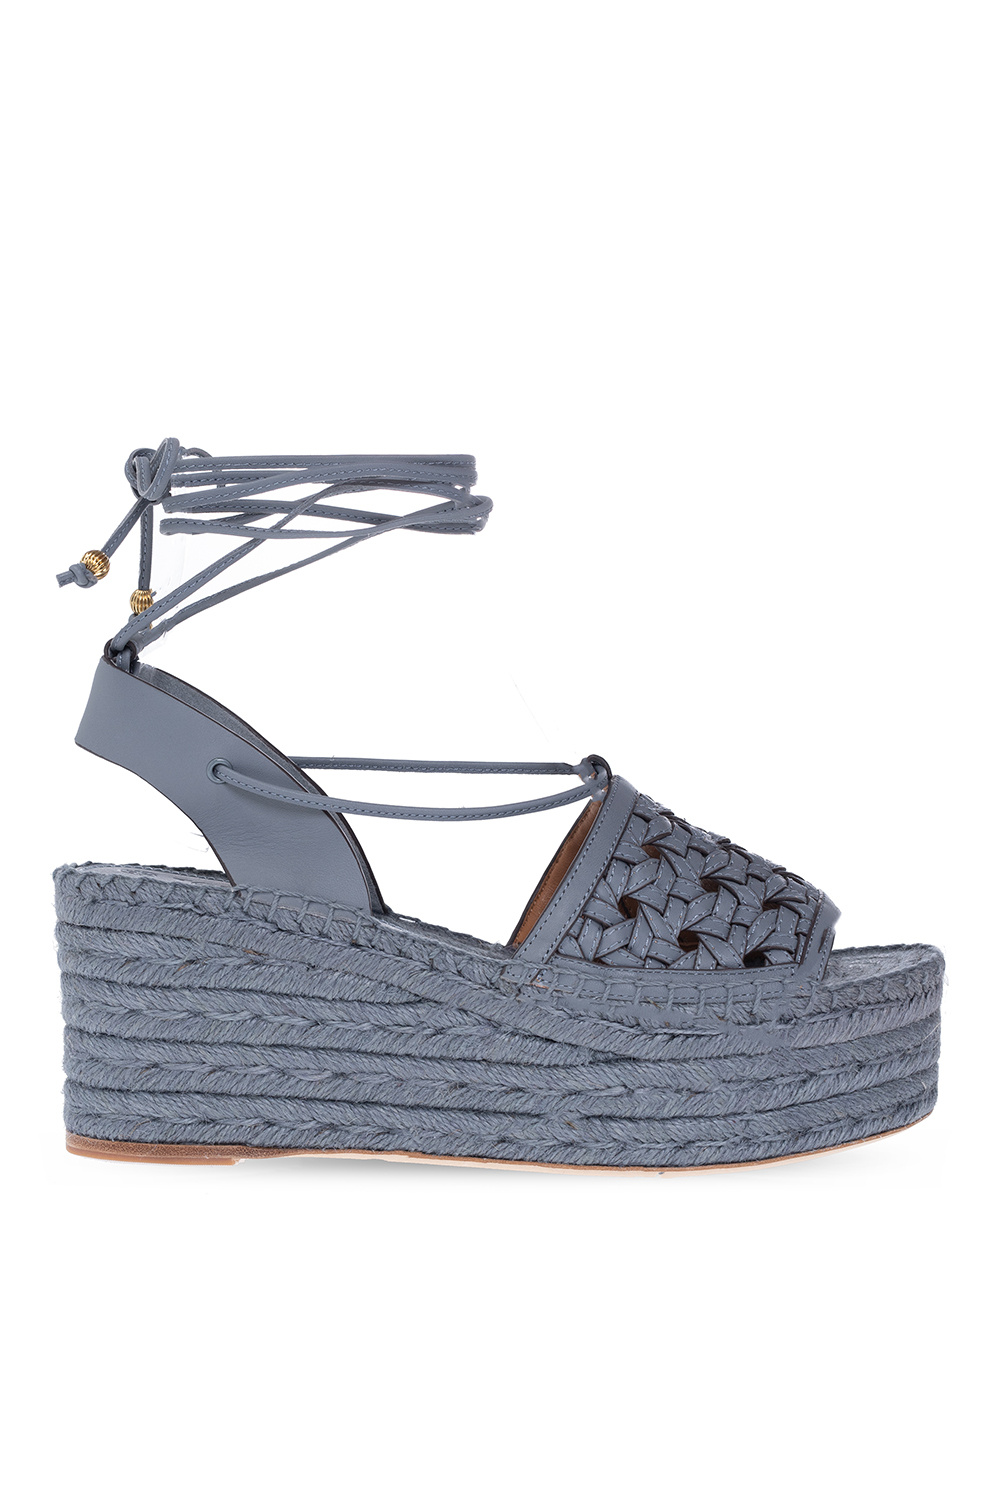 Tory Burch Platform sandals | Women's Shoes | Vitkac